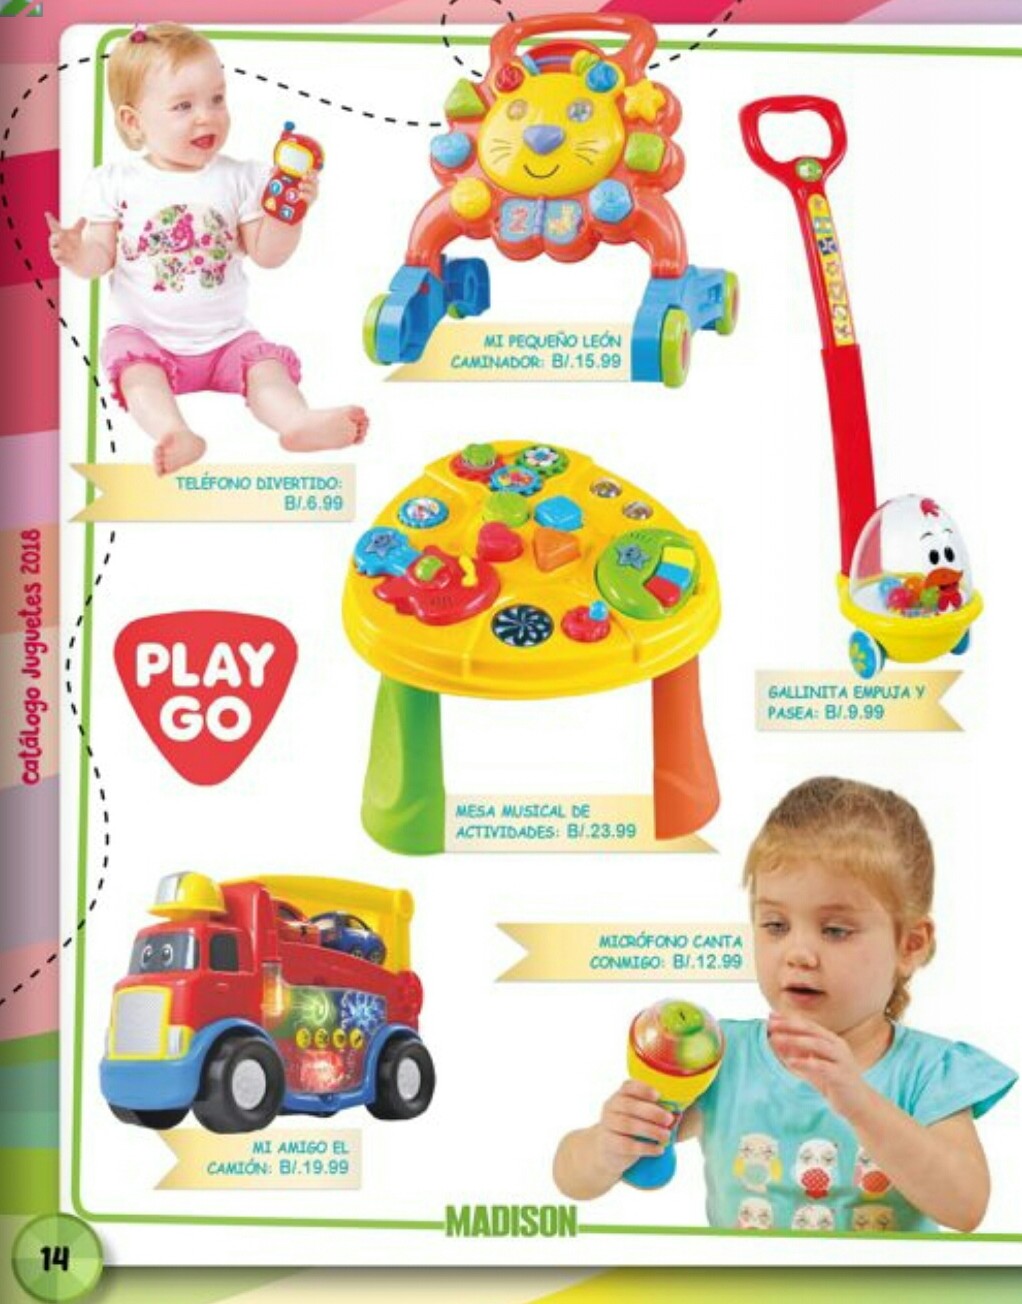 Catalogo juguetes madison store 2018 p13